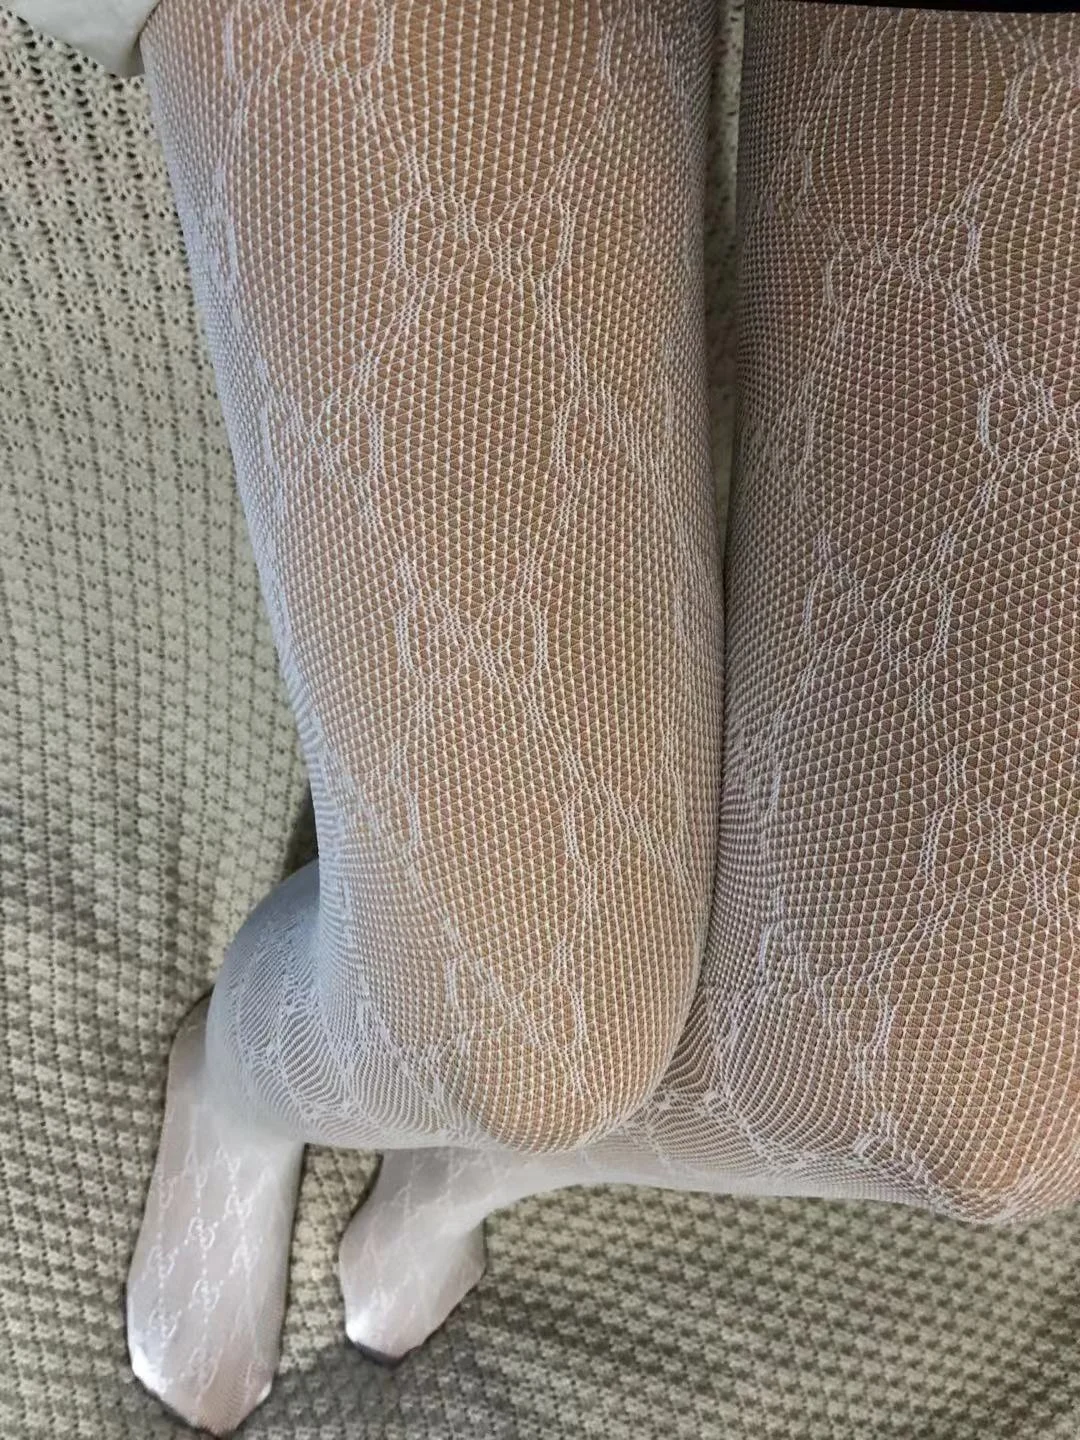 
Women Young Girls Nylon Japanese Foot Sexy pantyhose white fishnet Silk Stockings 